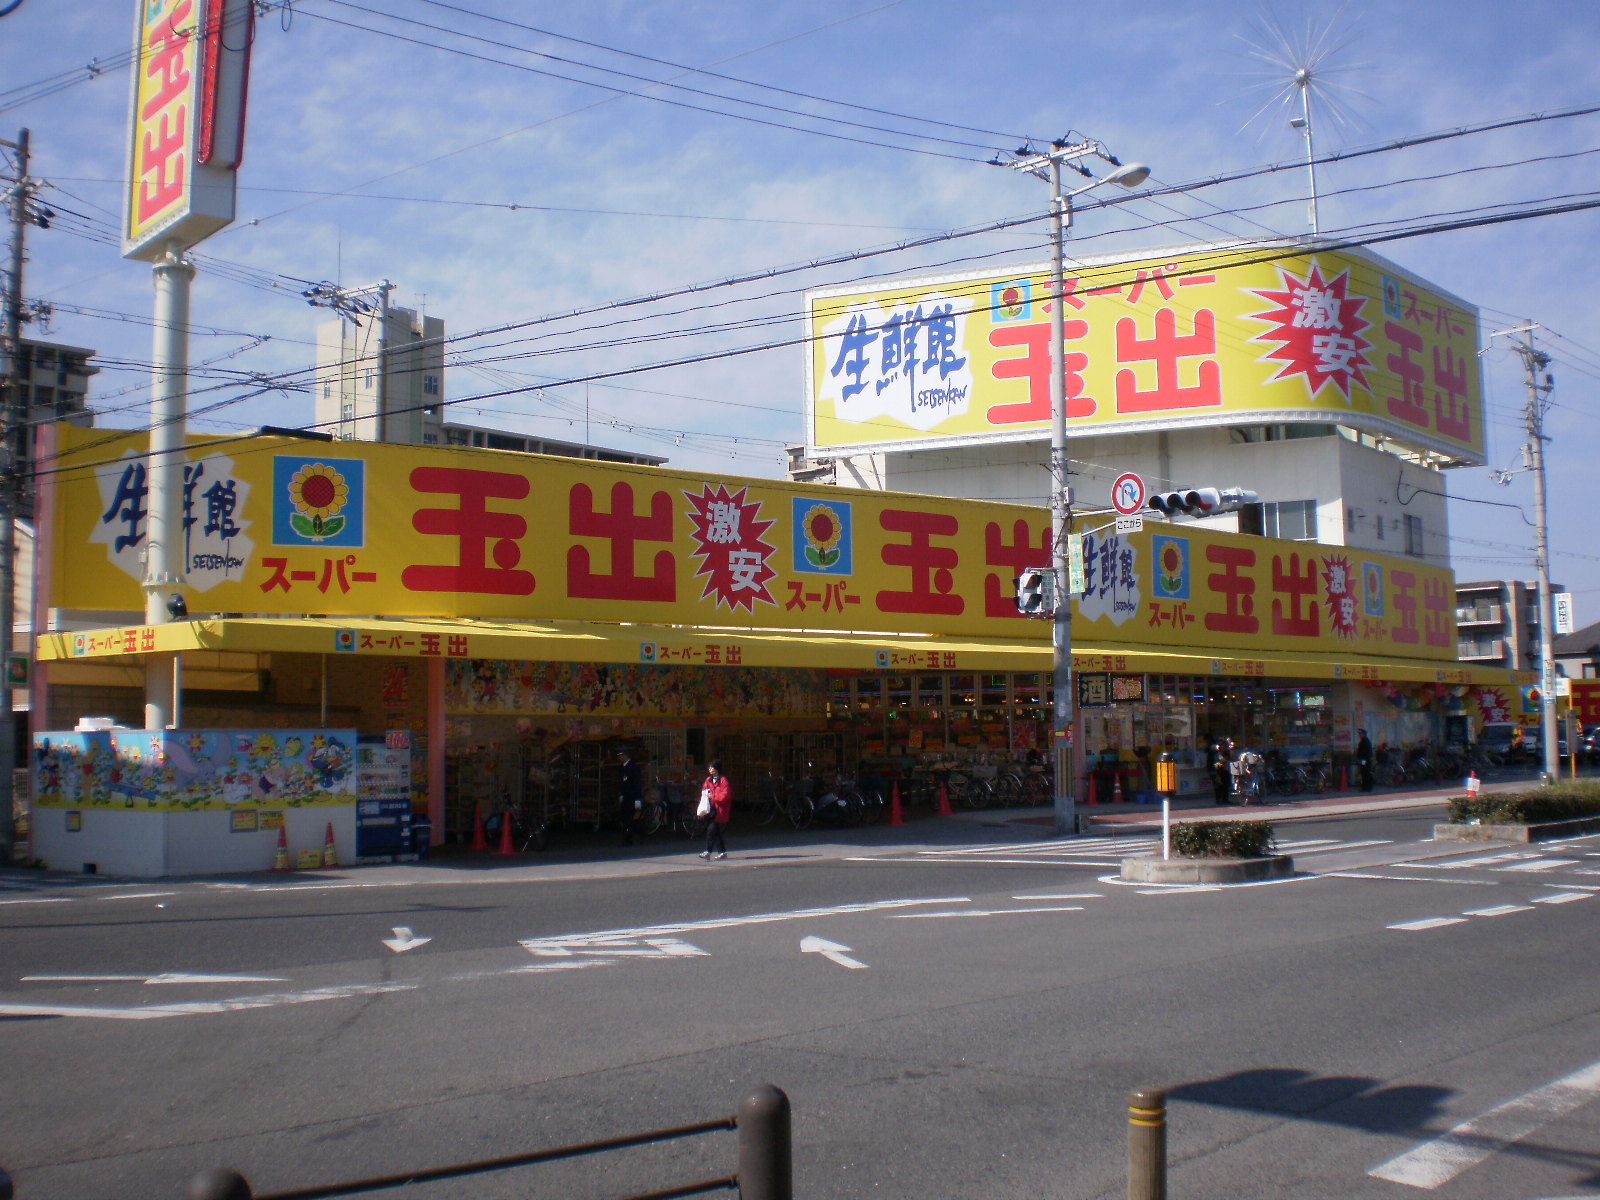 Supermarket. 787m to Super Tamade Kire store (Super)